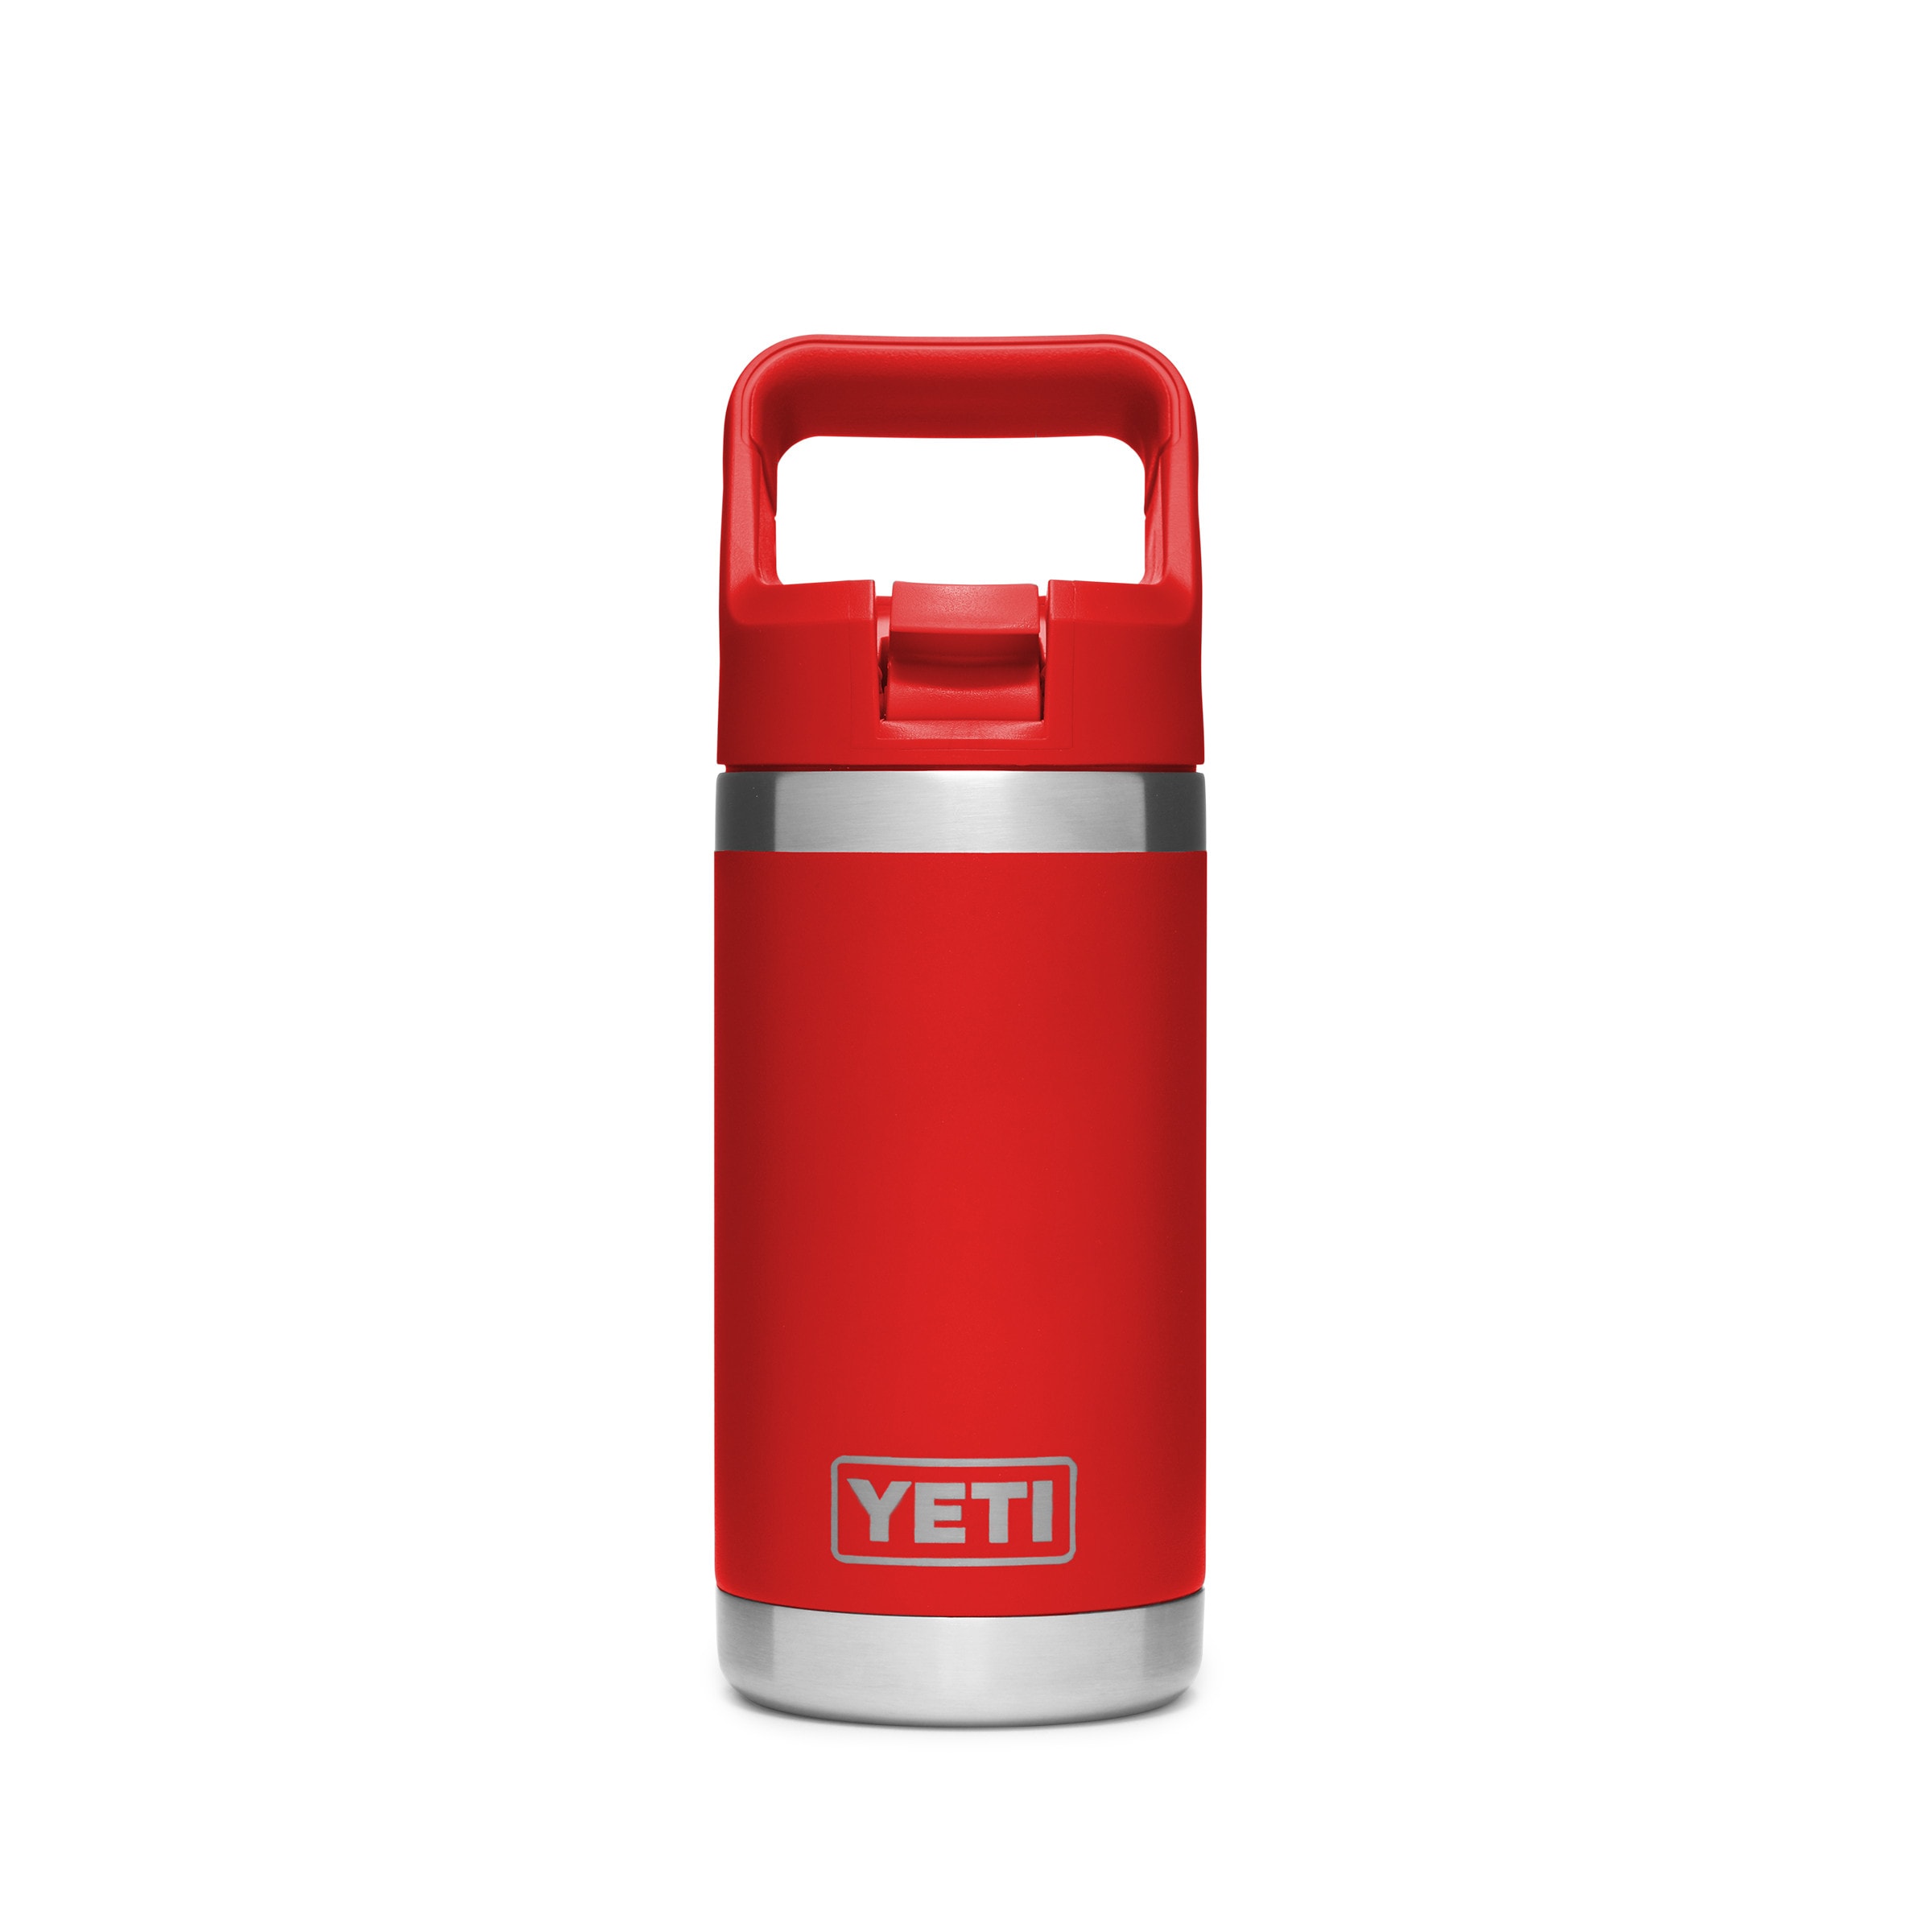 YETI Rambler 12-fl oz Stainless Steel Water Bottle in the Water